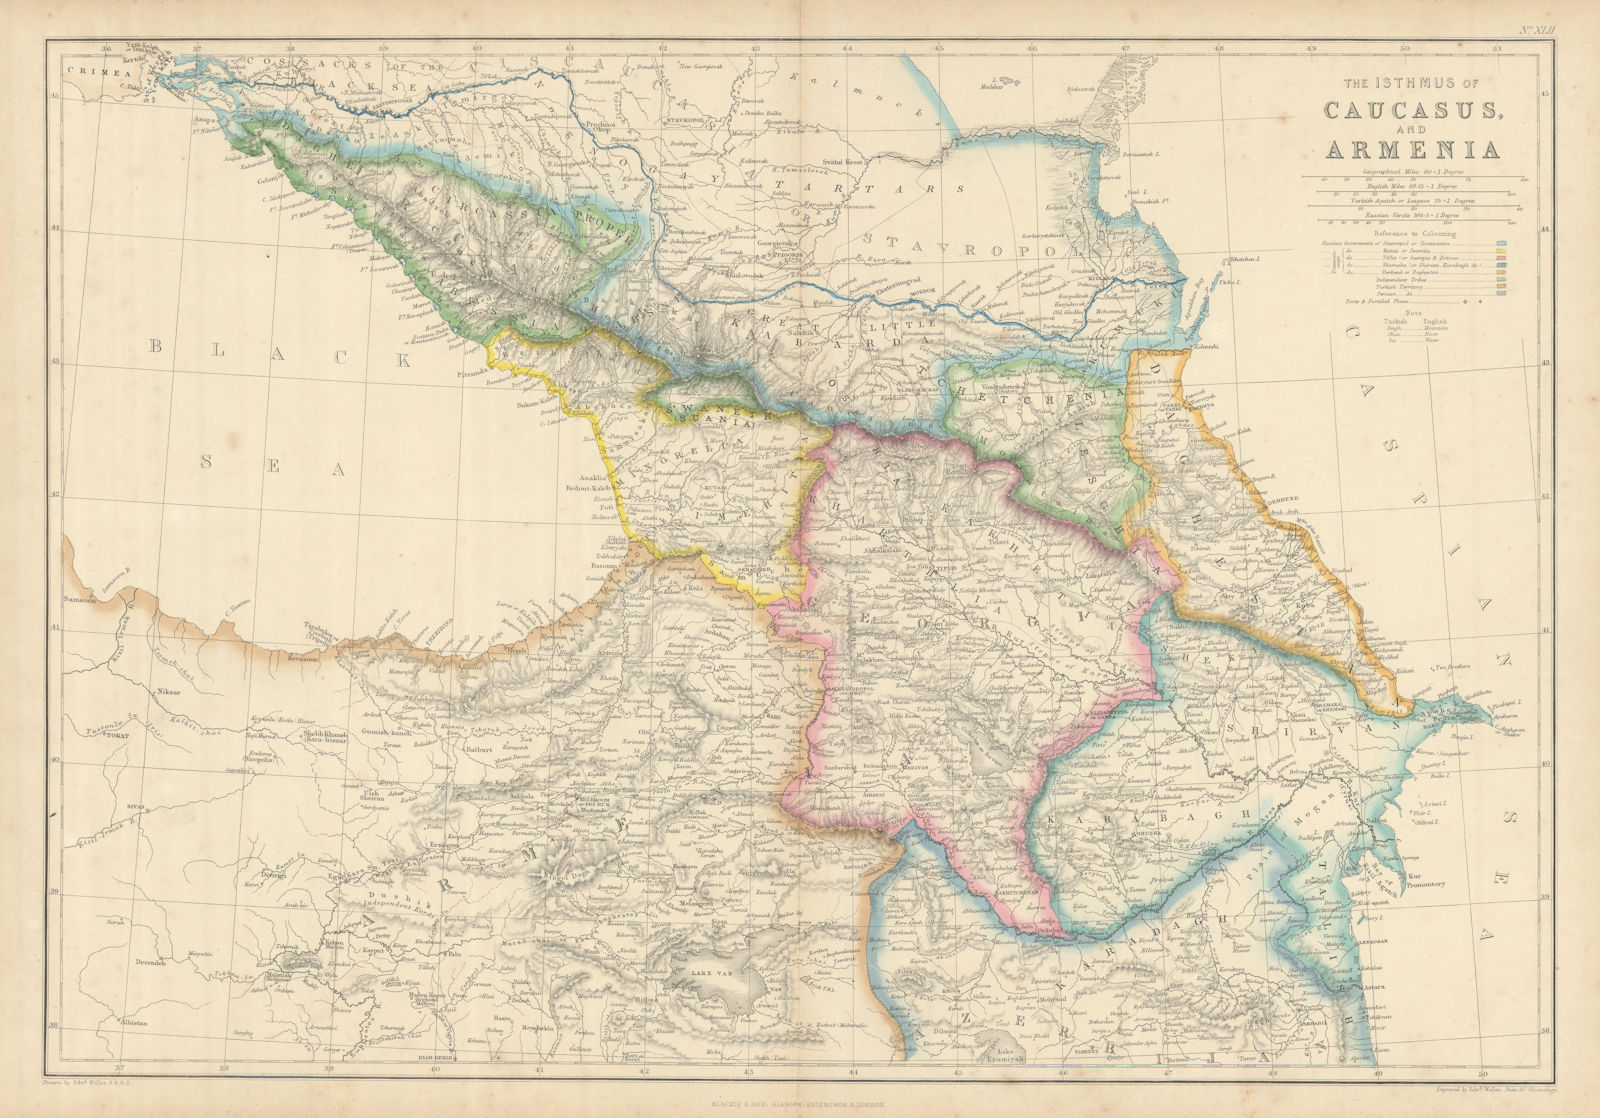 The Isthmus of Caucasus & Armenia by Edward Weller. Georgia Azerbaijan 1860 map